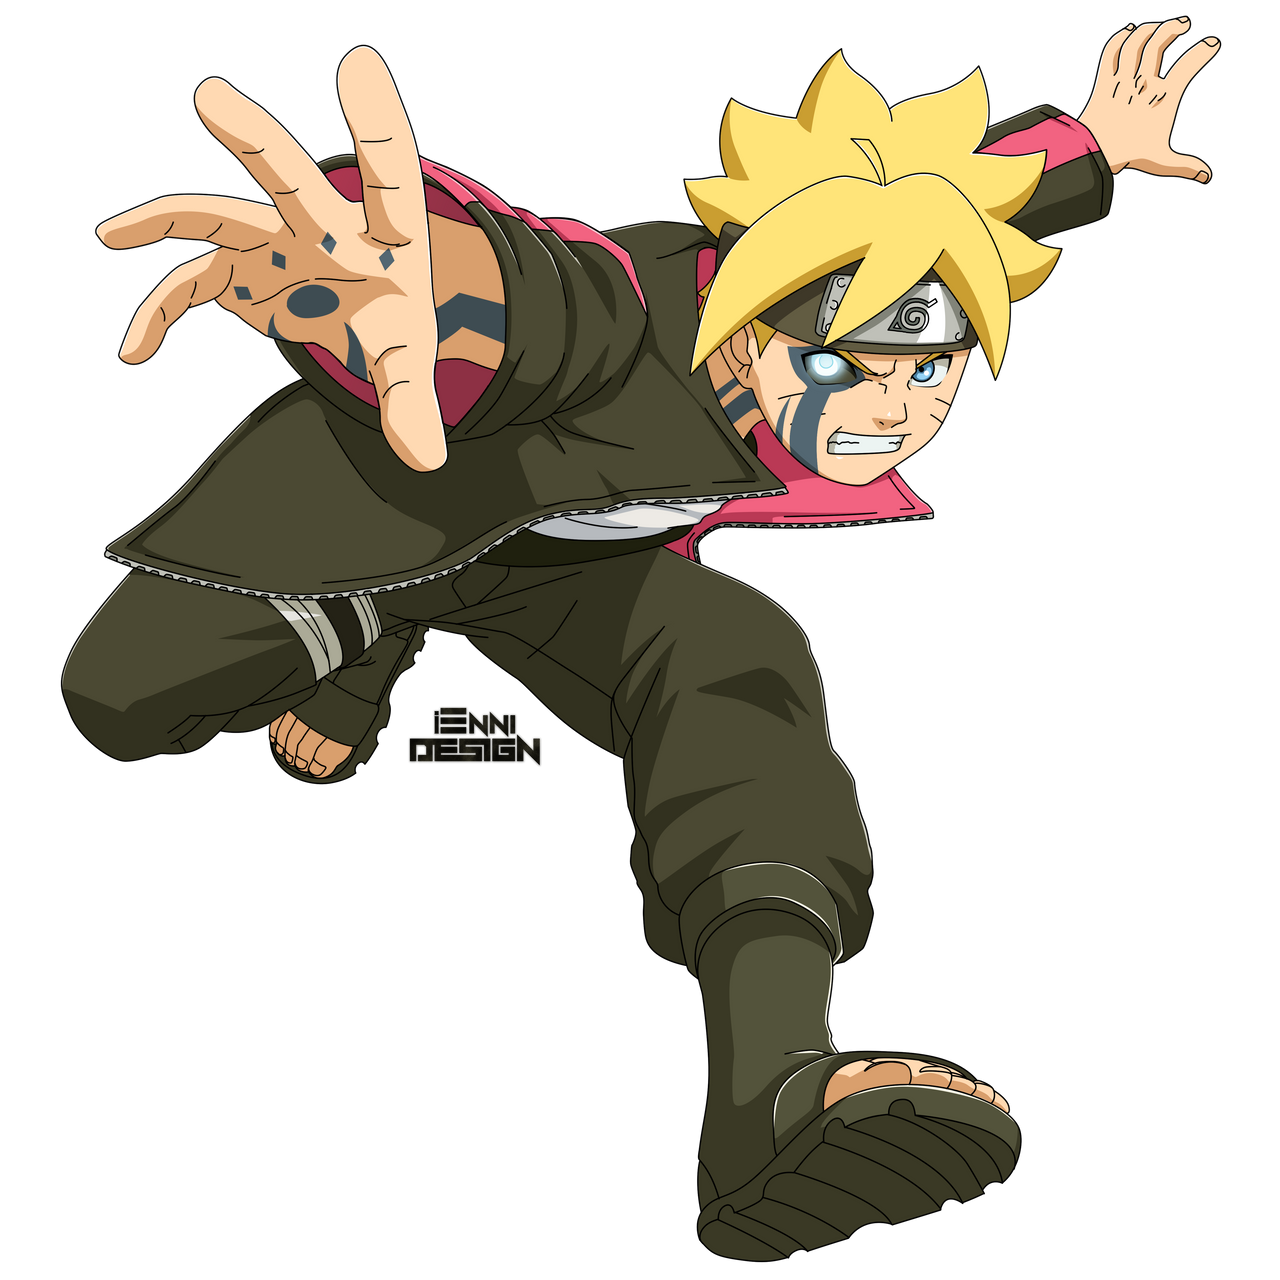 Boruto:Naruto Next Generation, Boruto (Adult) by iEnniDESIGN on DeviantArt